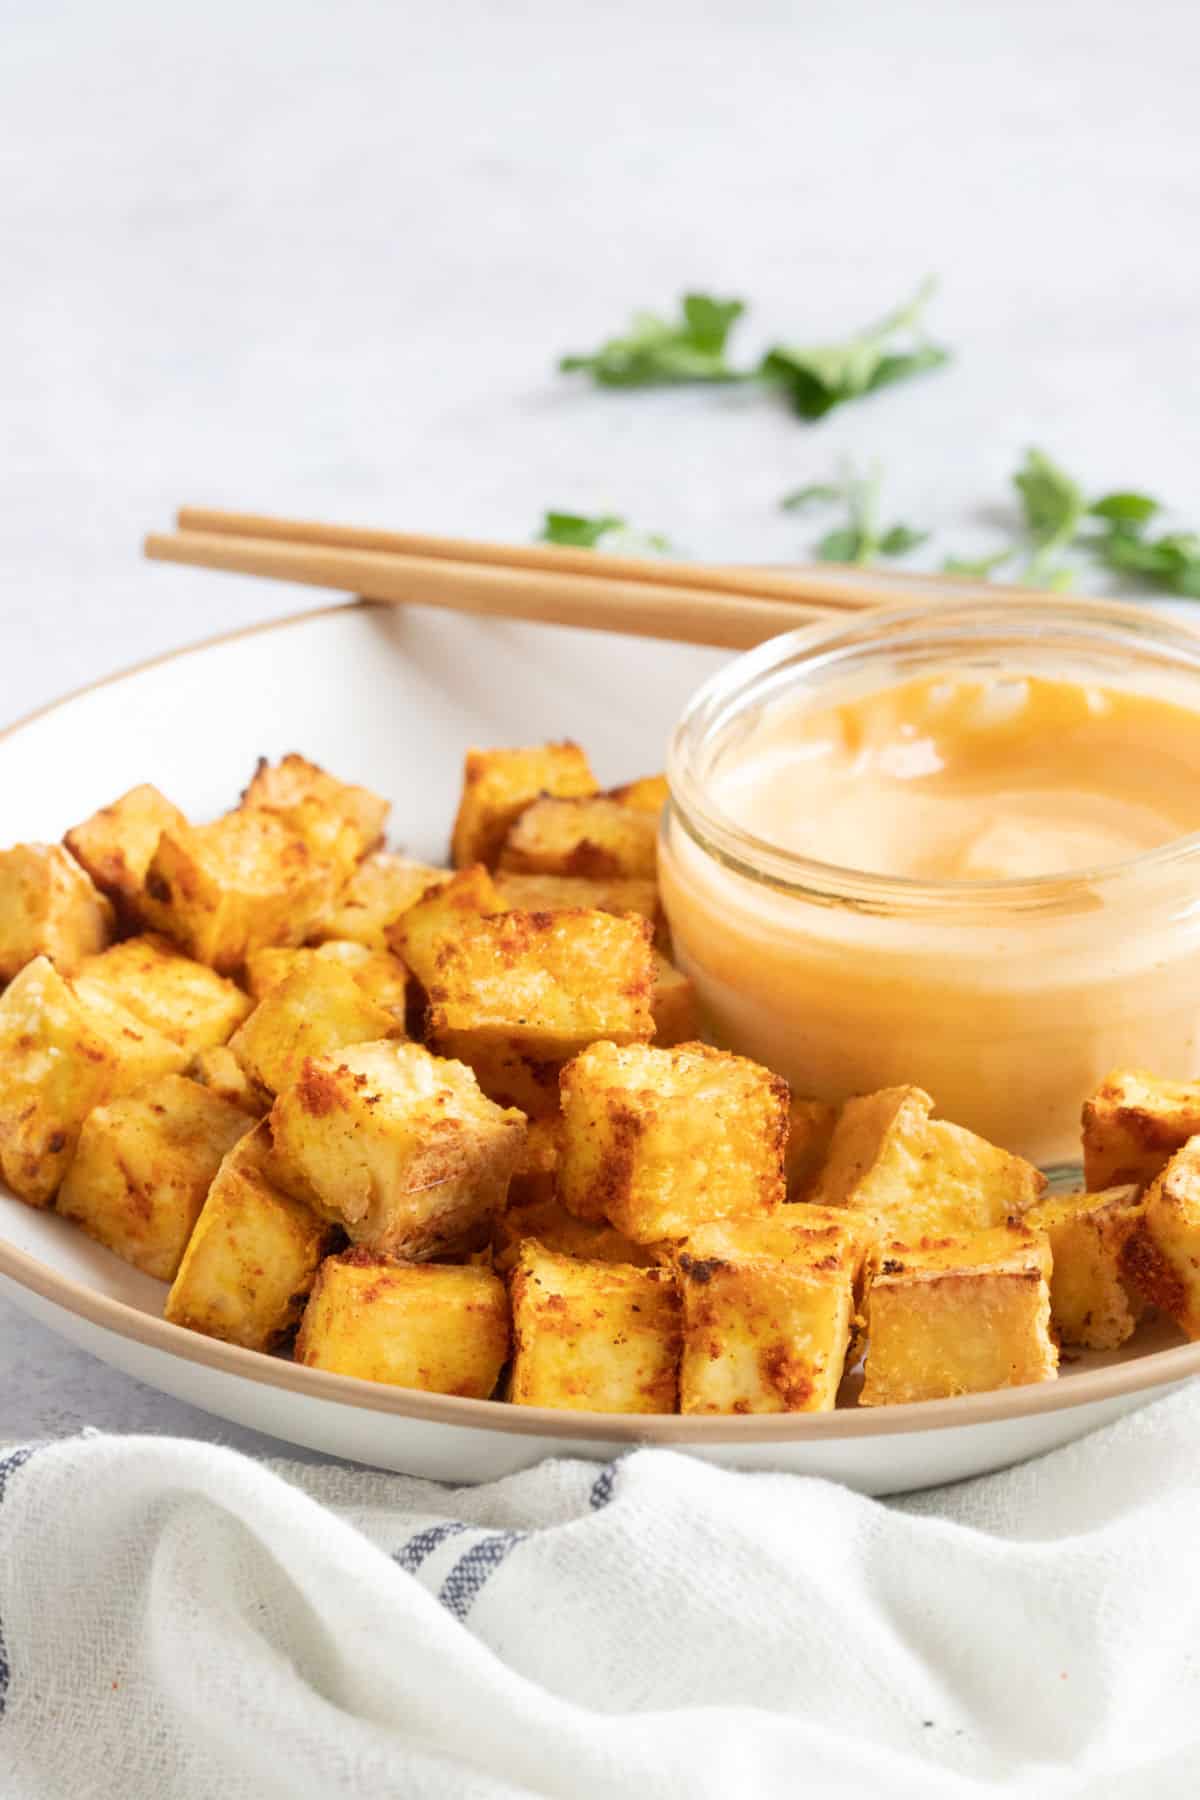 Crispy tofu bites on a plate.